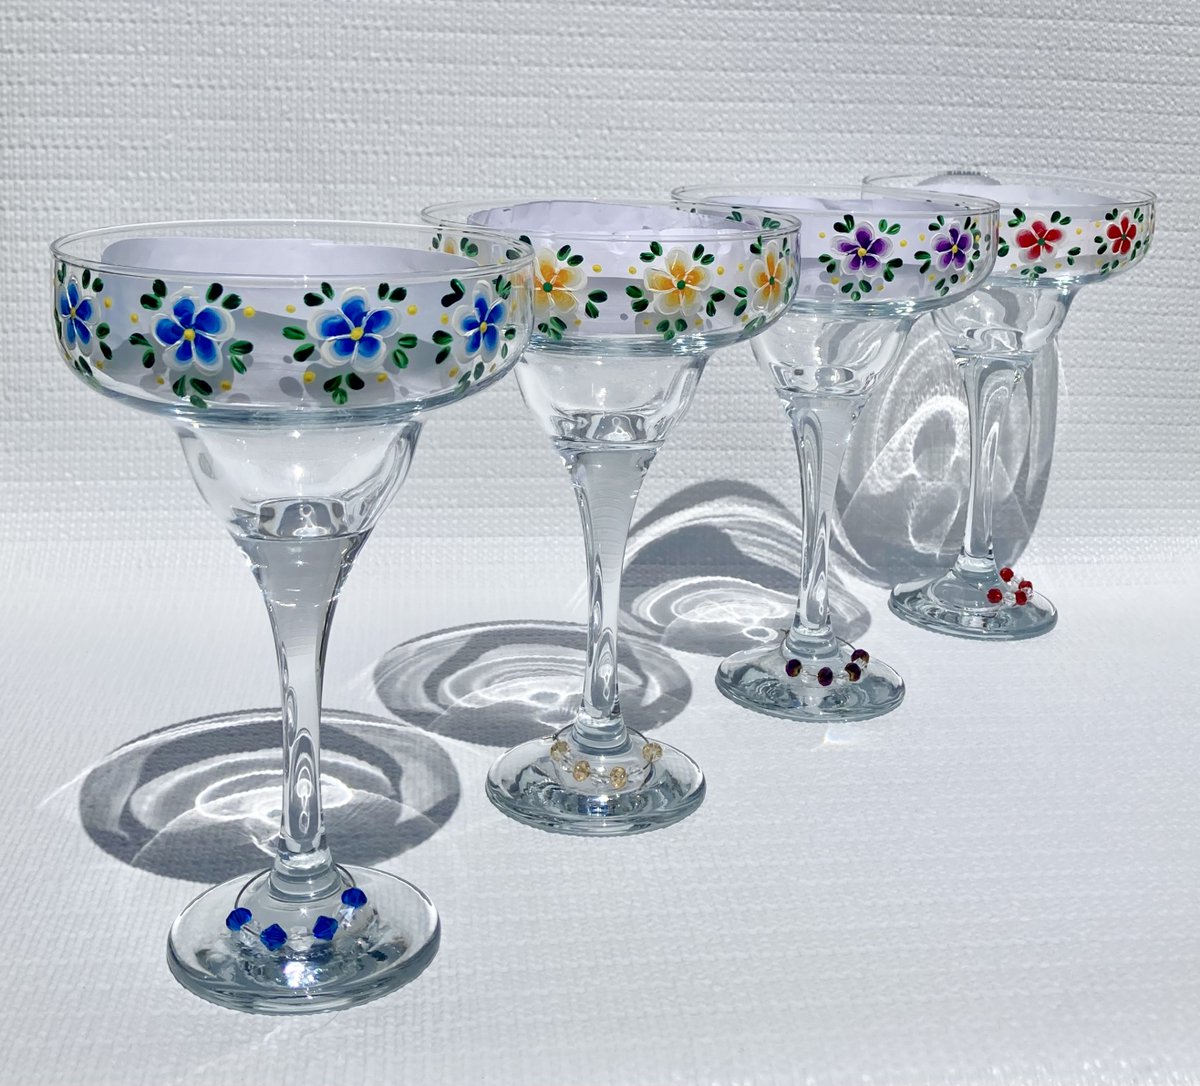 Check these out etsy.com/listing/171826… #margaritaglasses #partyglasses #mimosas #SMILEtt23 #CraftBizParty #MothersDay #etsy #etsyshop #shopsmall